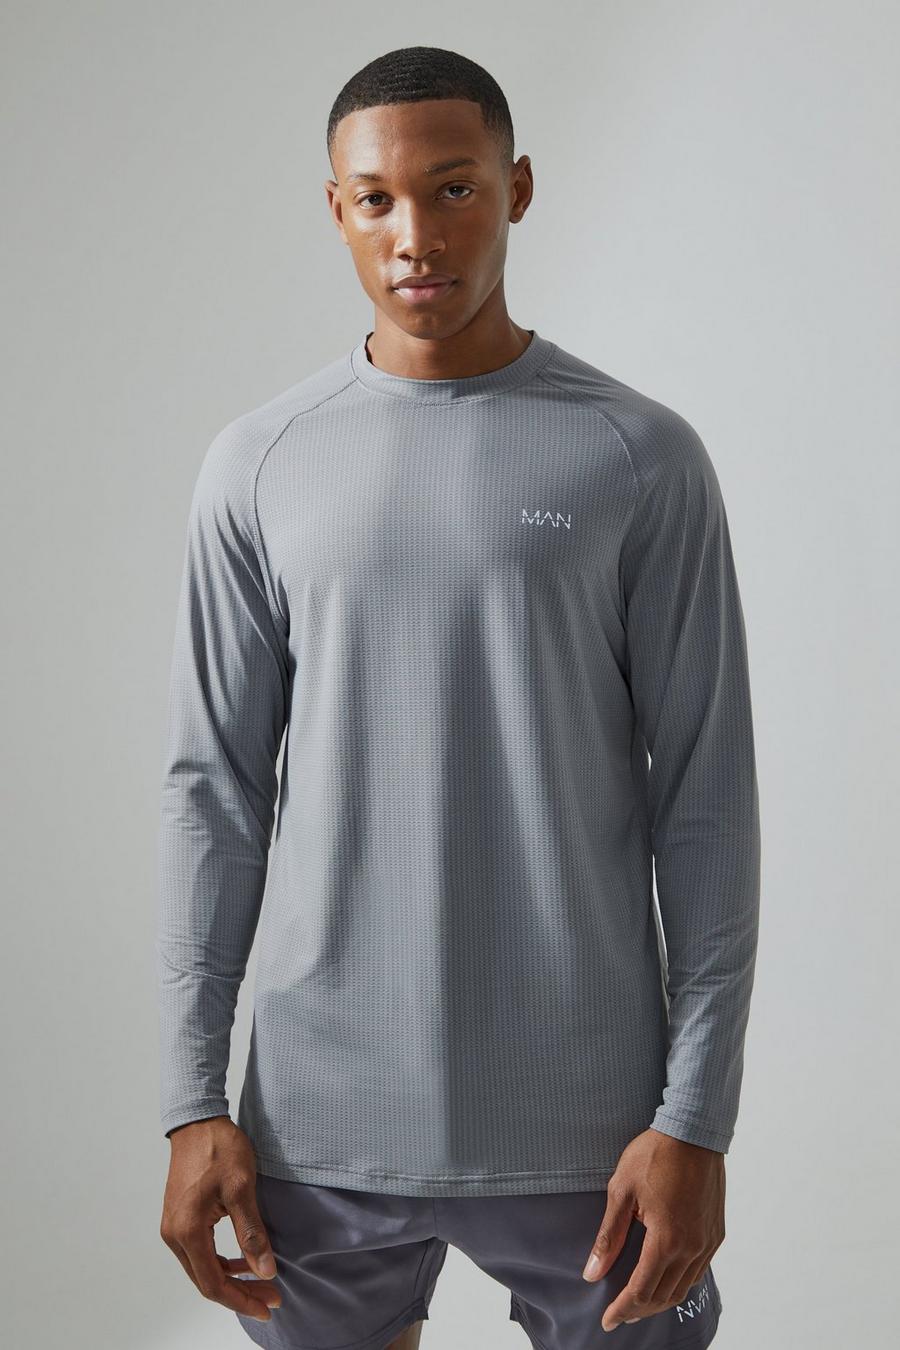 Grey Marl Long Sleeve Gym Top